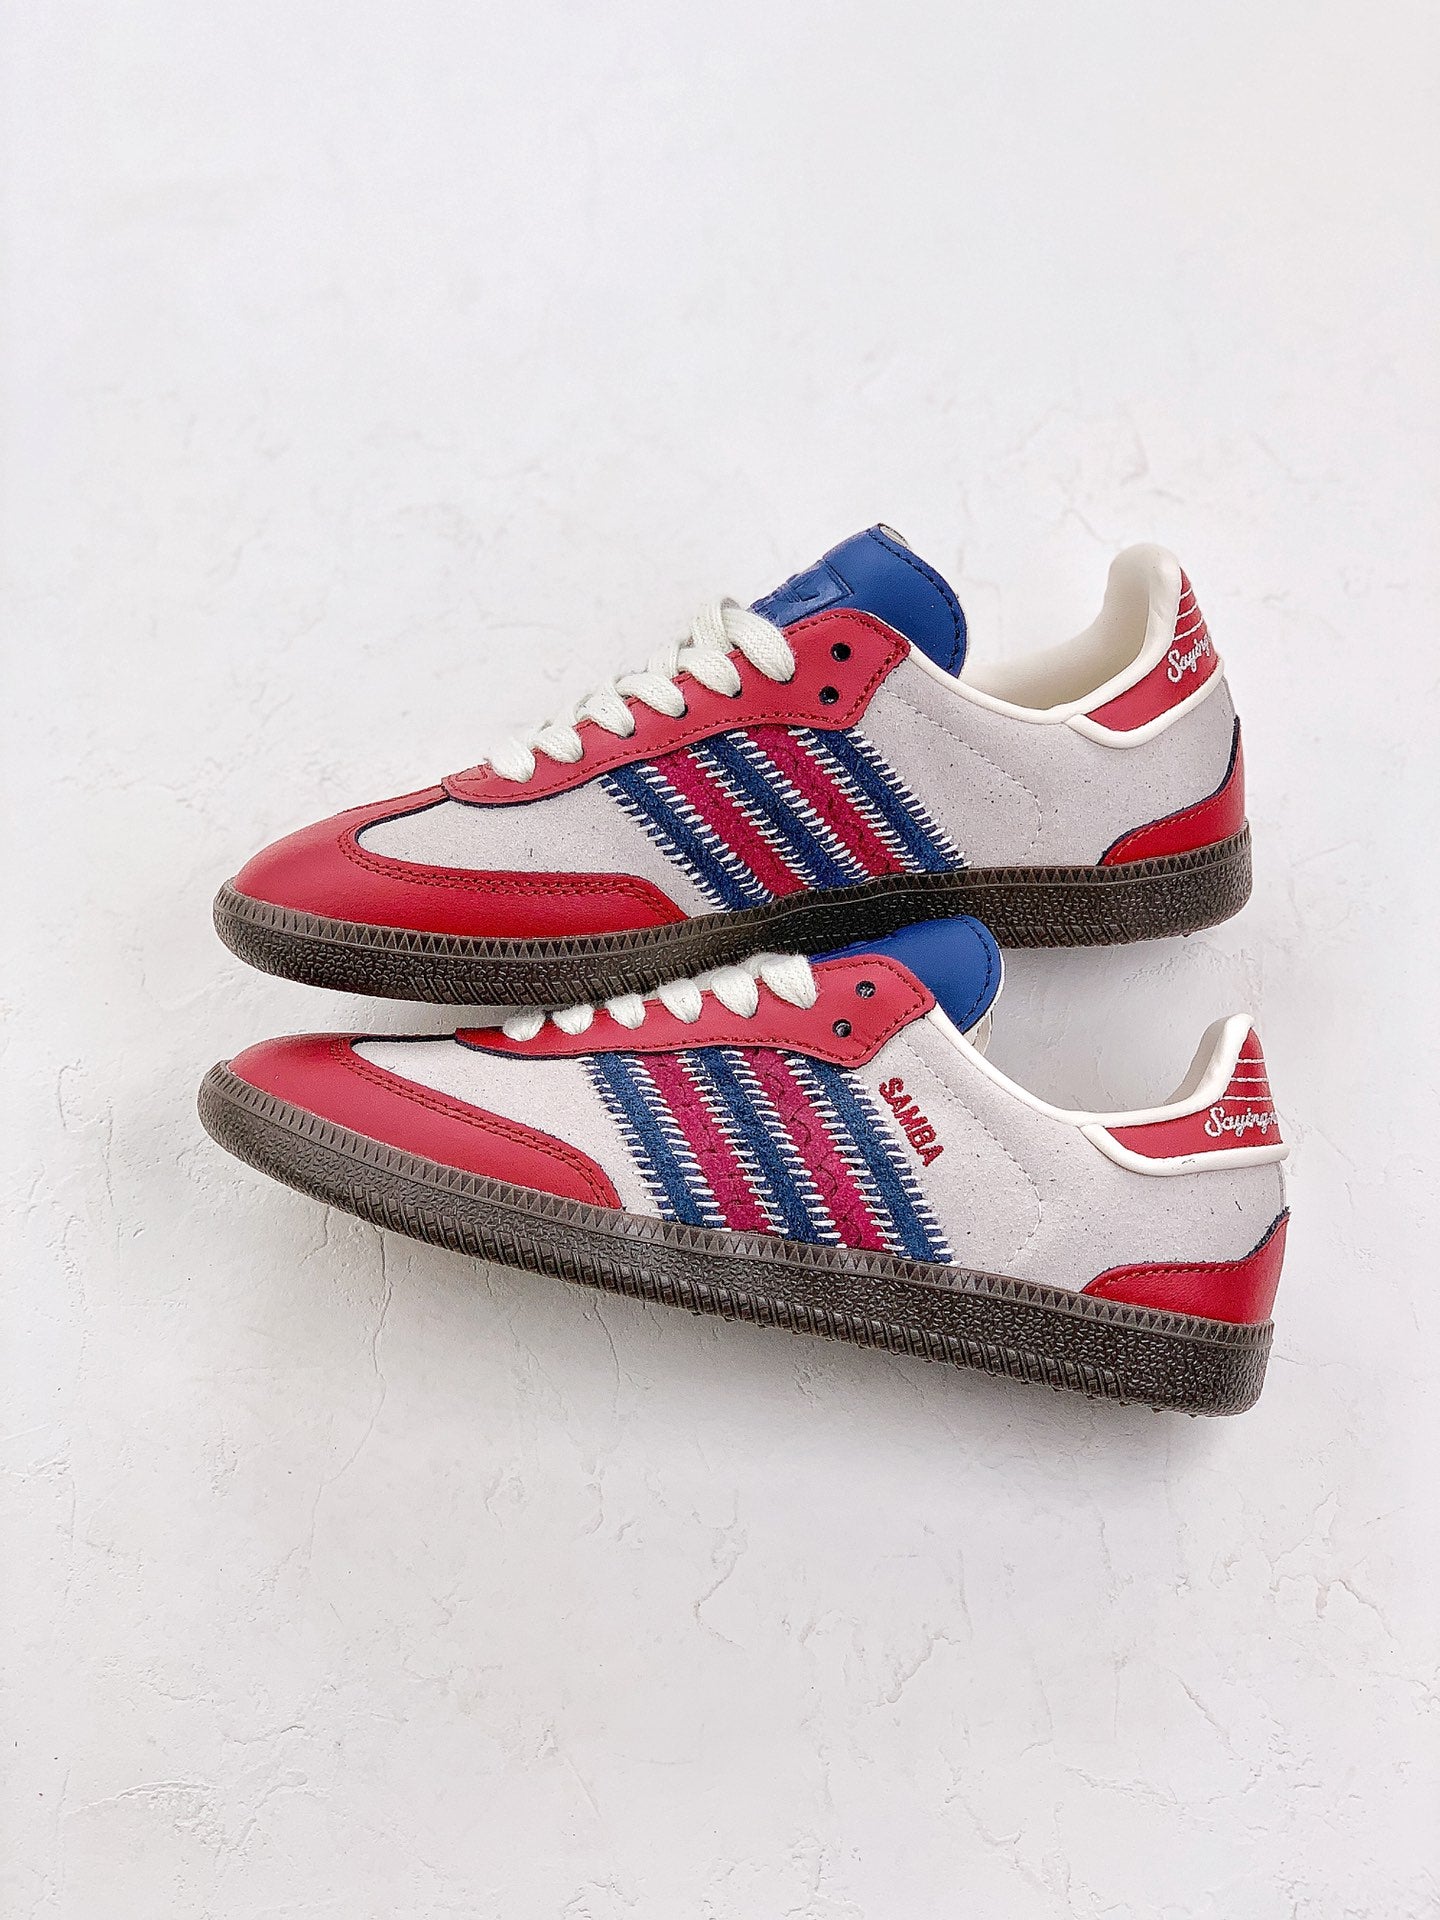 Adidas samba red and blue shoes